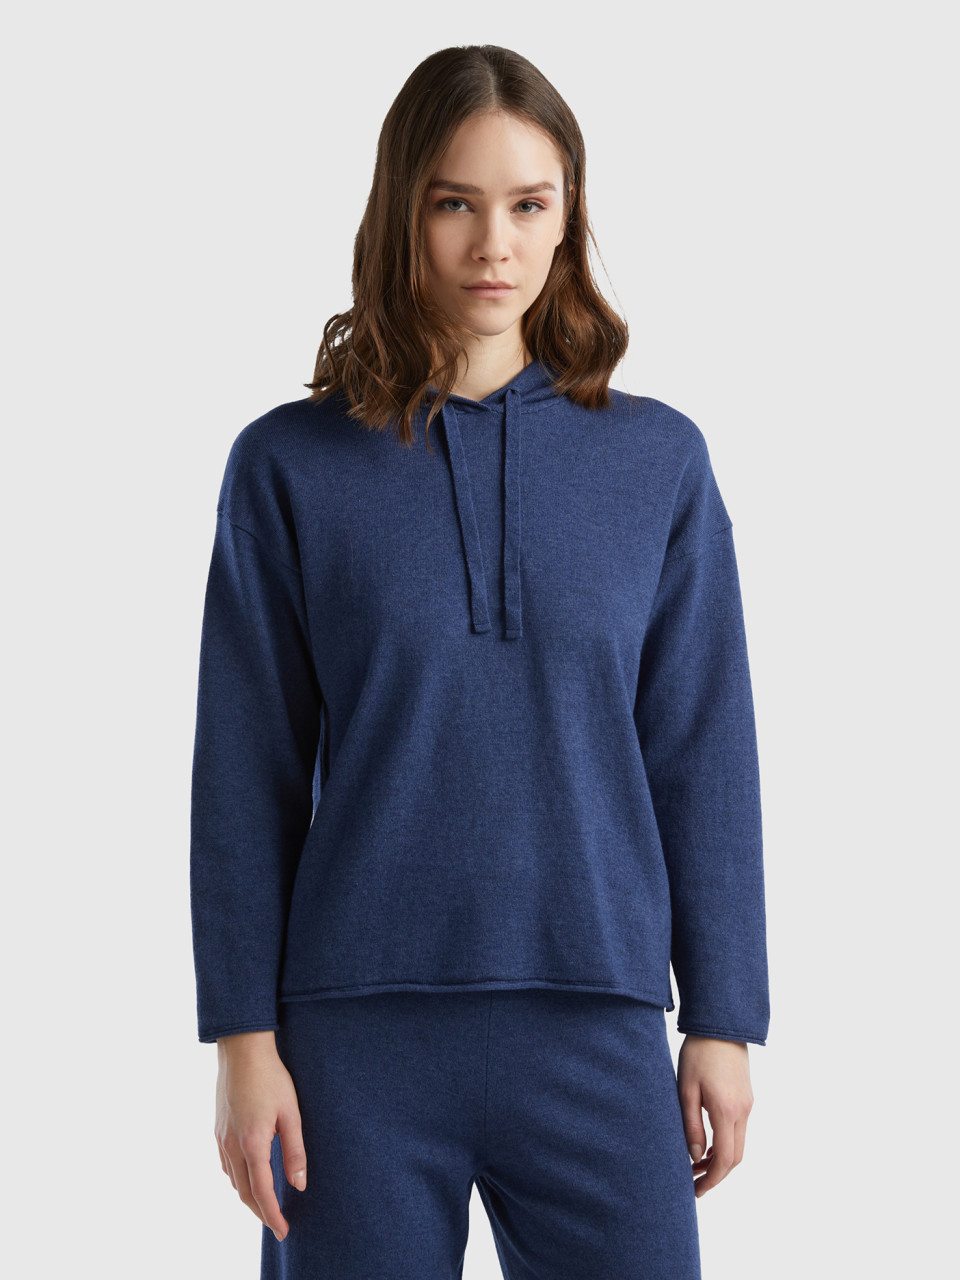 Benetton, Air Force Blue Cashmere Blend Sweater With Hood, Air Force Blue, Women